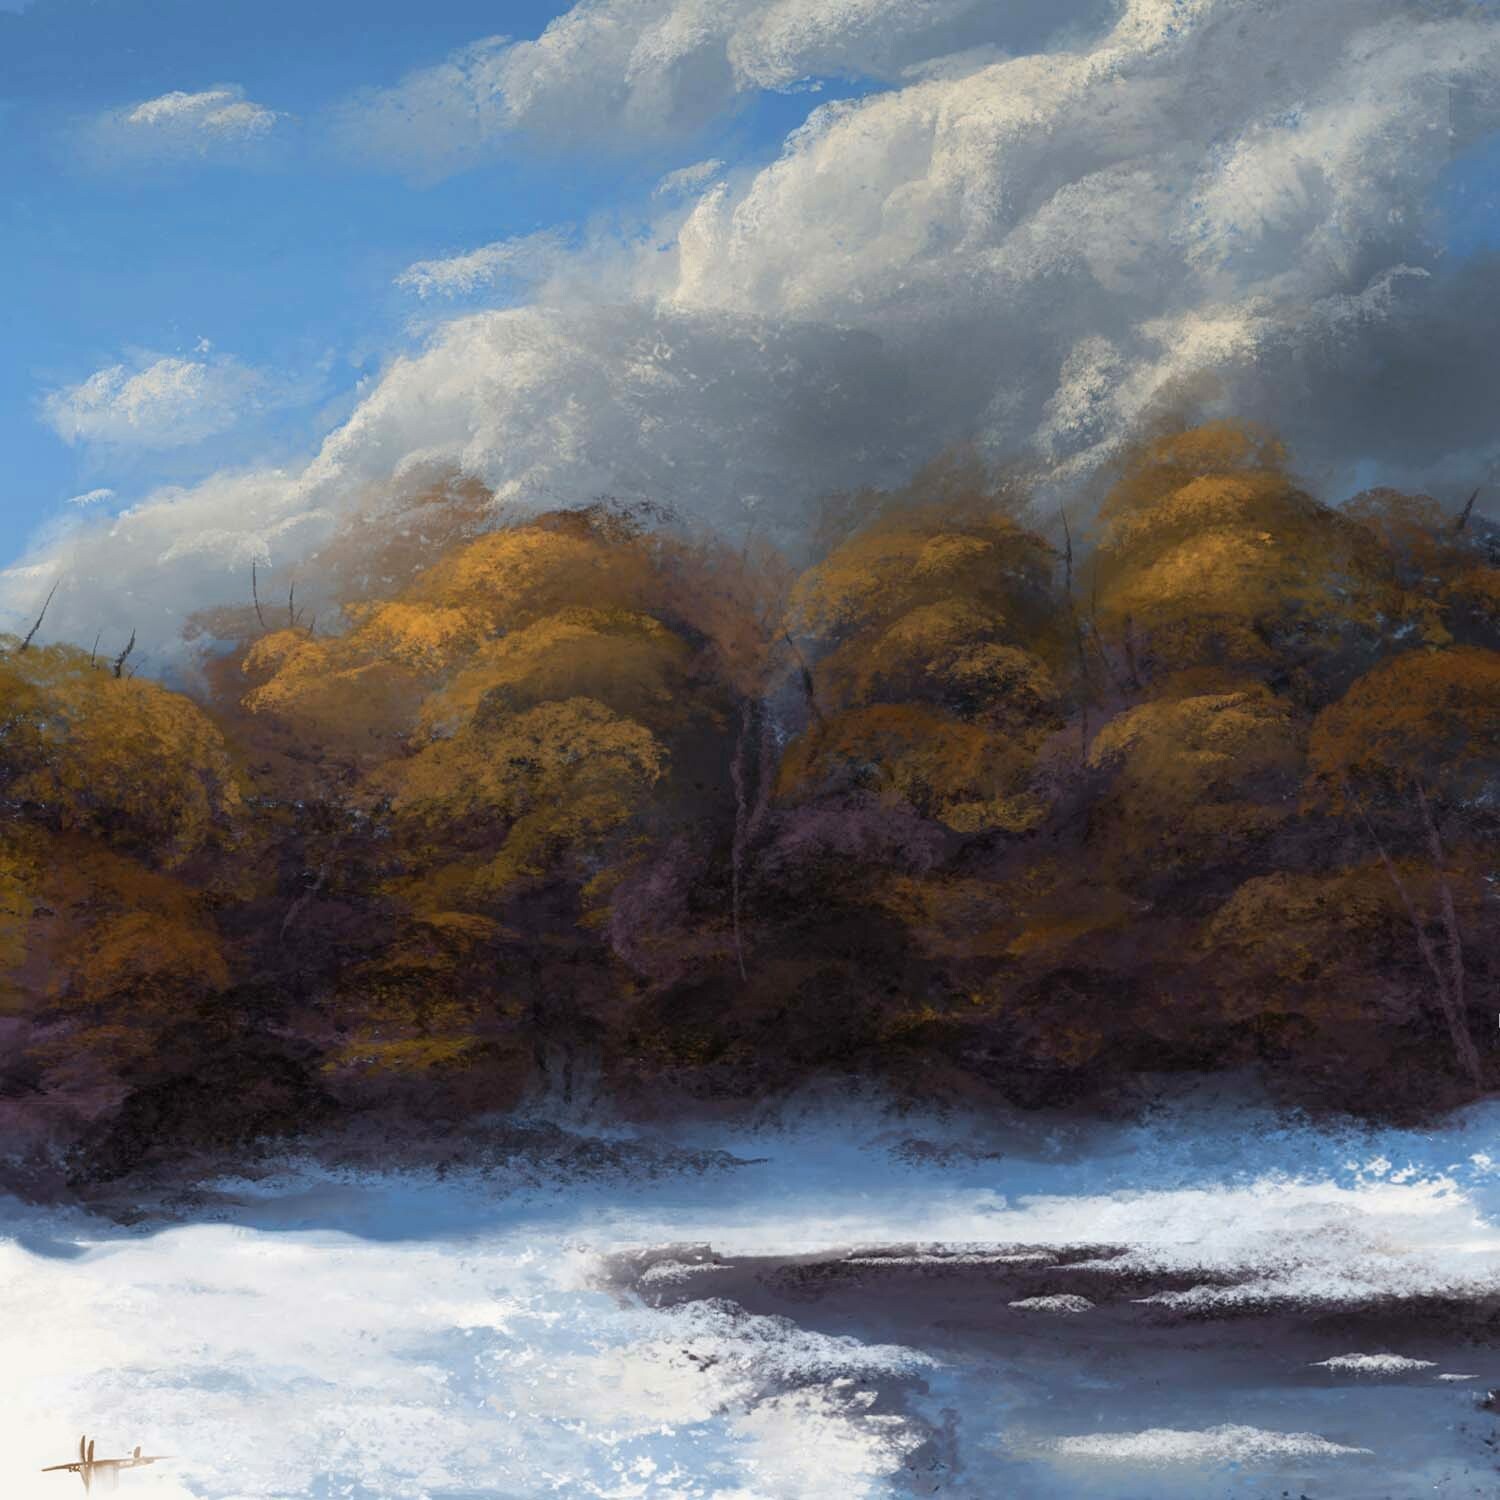 Digital Landscape / Scenery Art Painting - Winter Trees 